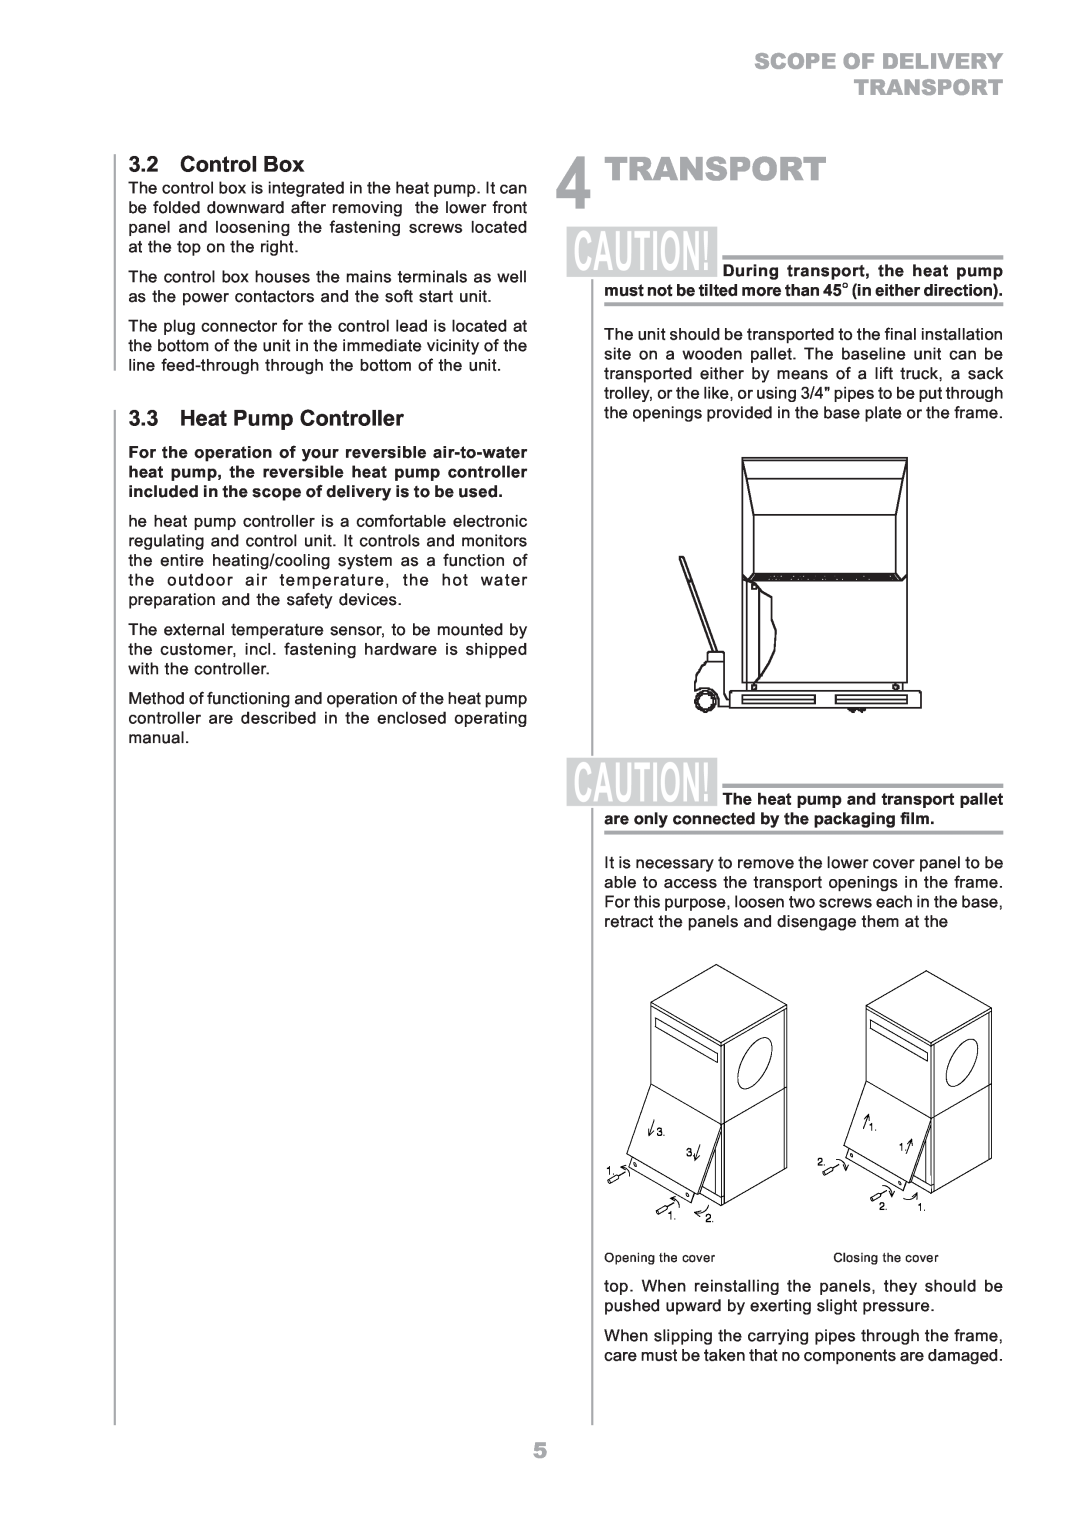 Dimplex LA16ASR manual 4TRANSPORT, Control Box, Heat Pump Controller, Scope Of Delivery Transport 